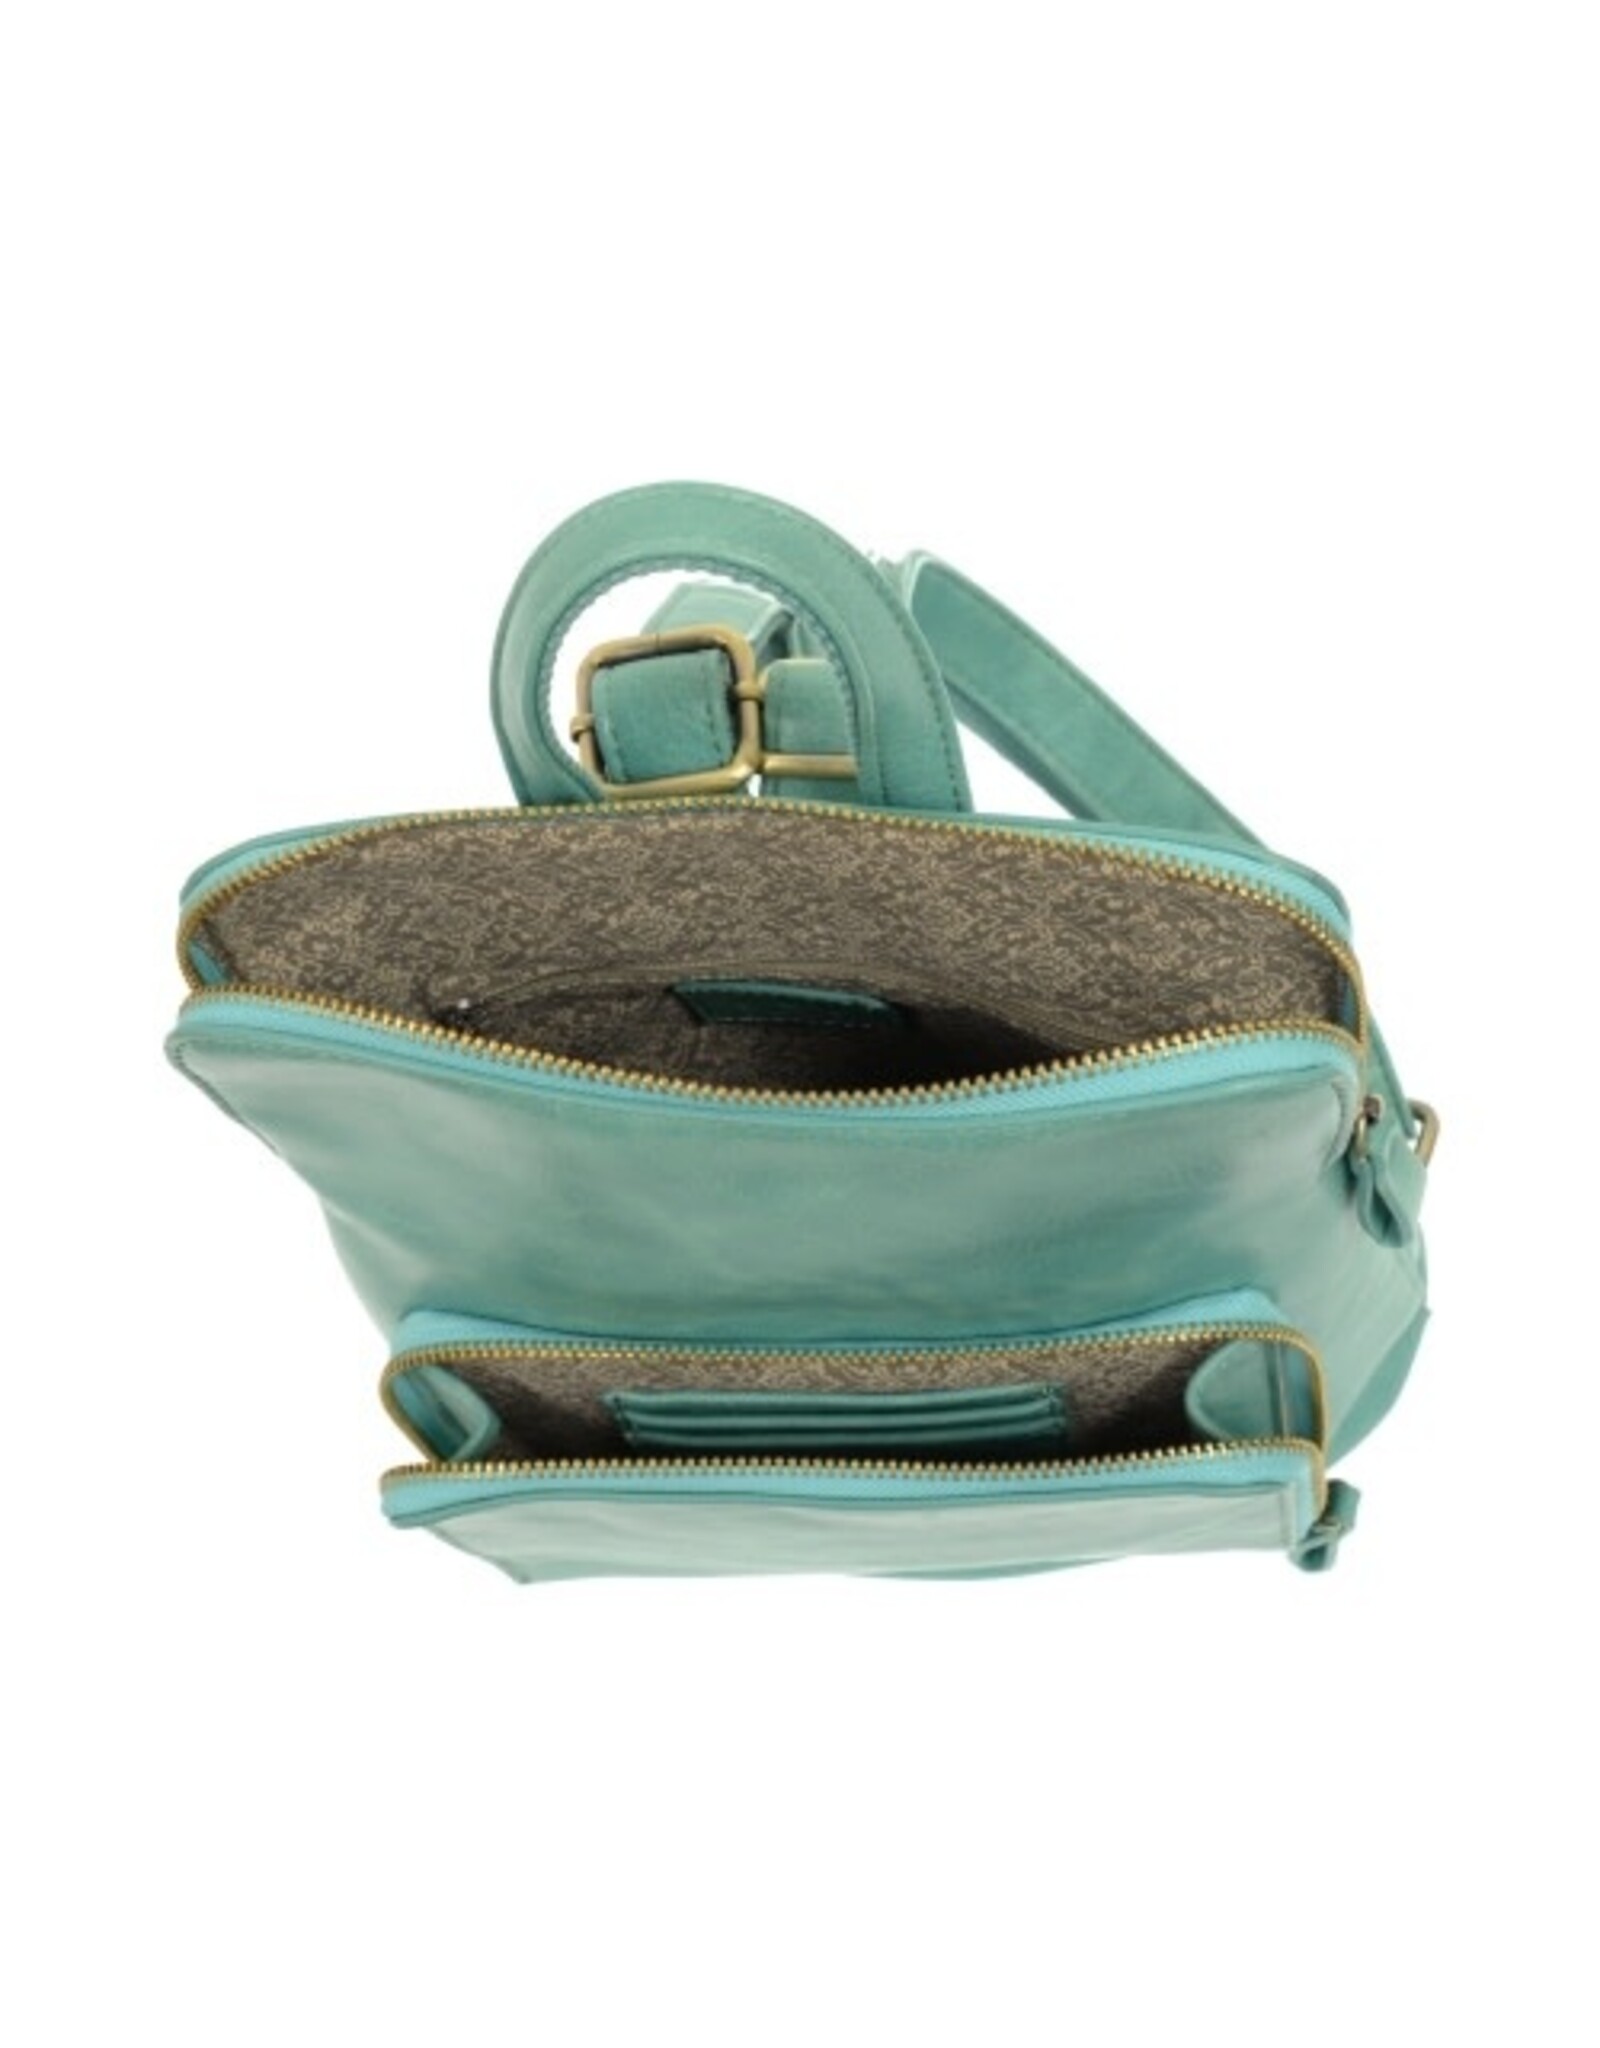 Joy Susan Julia Mini Backpack-True Turquoise